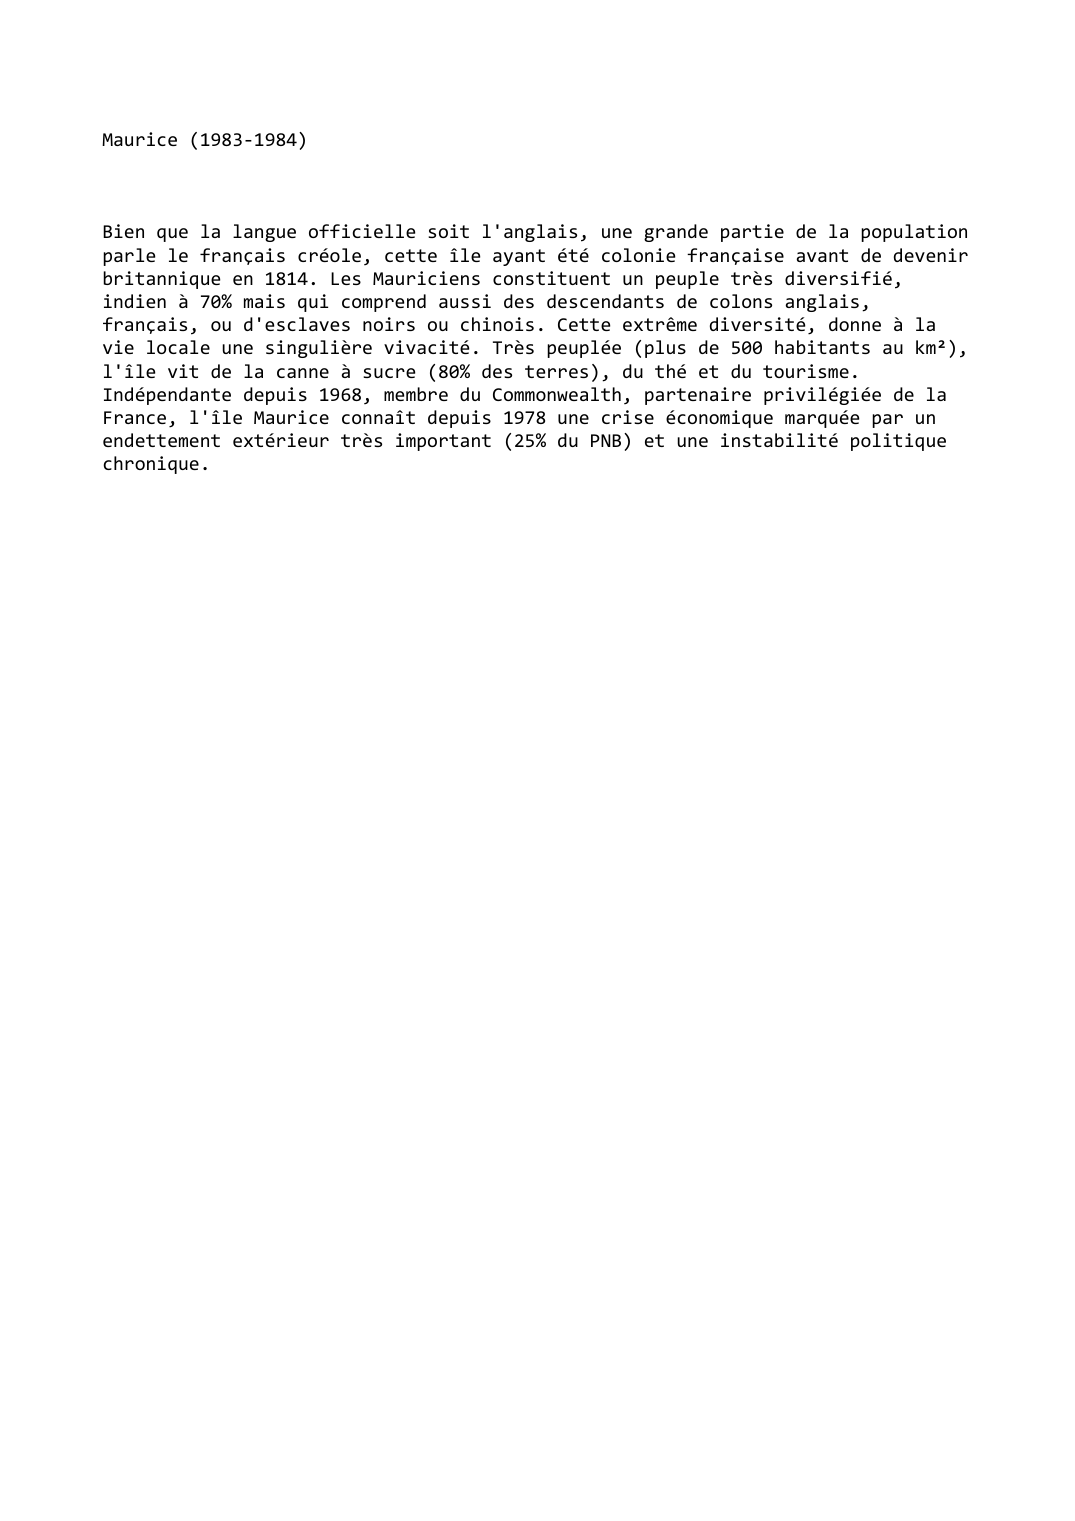 Prévisualisation du document Maurice (1983-1984)